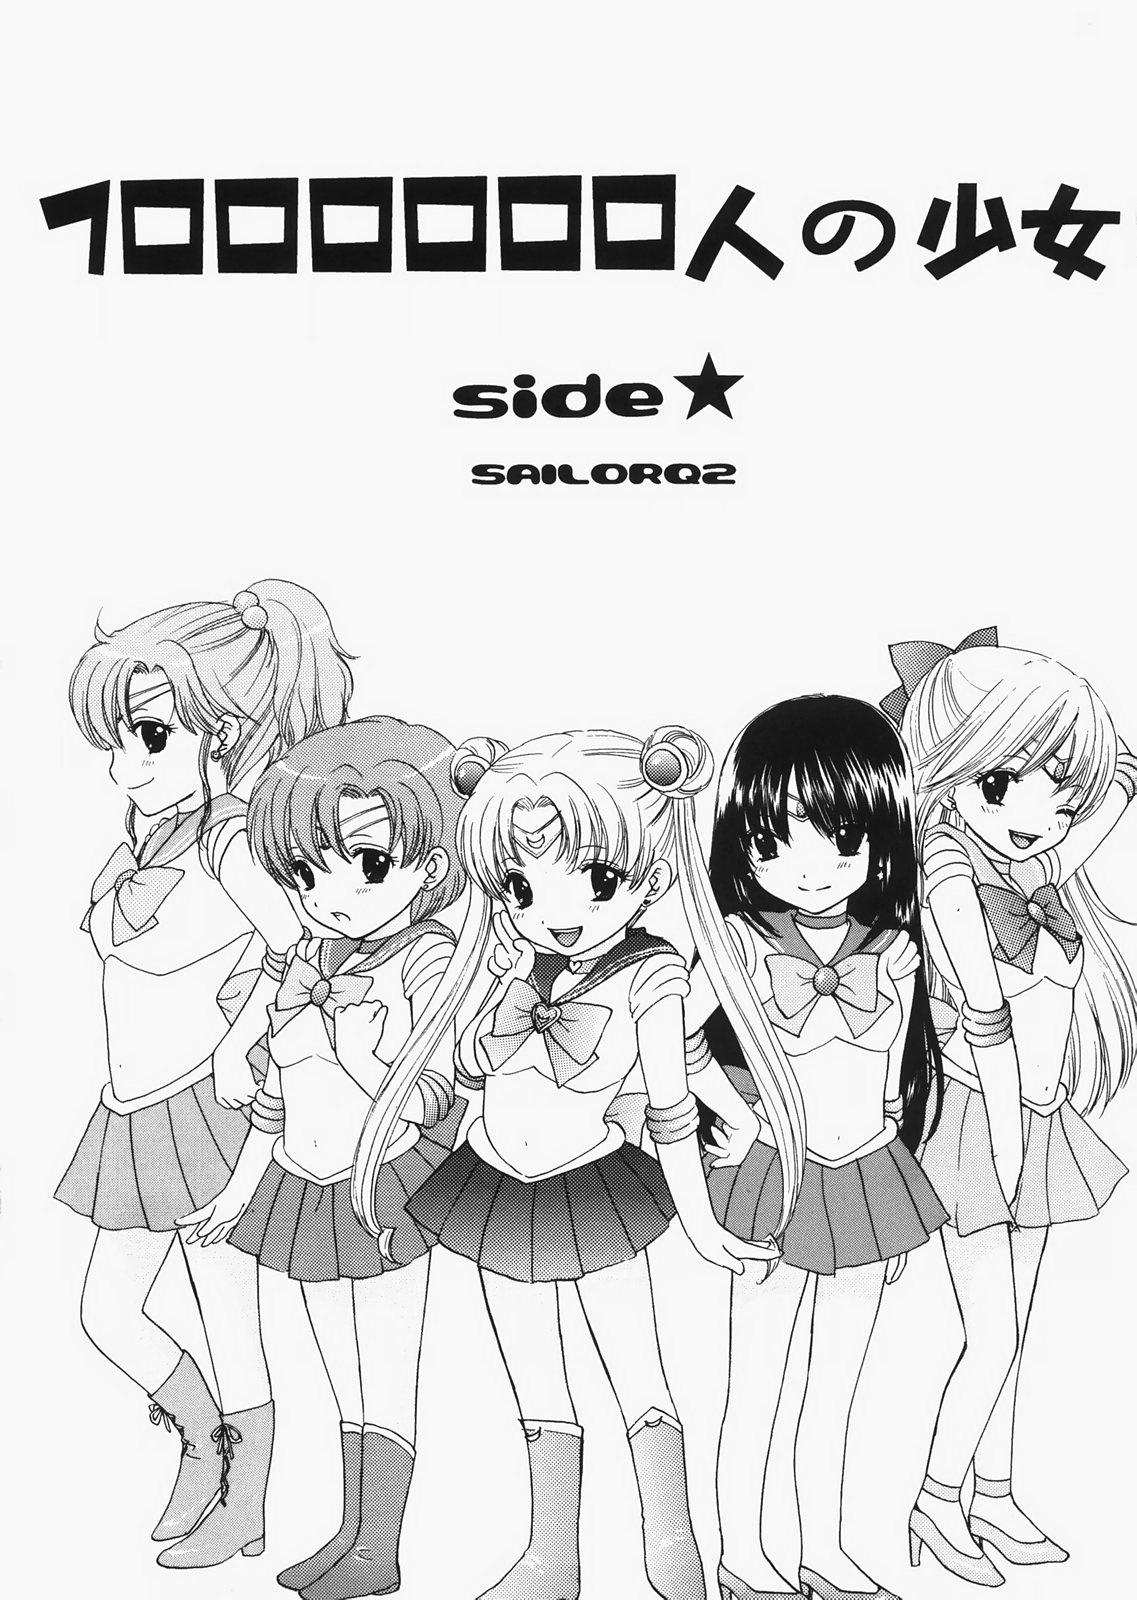 Mouth 1000000-nin no Shoujo side star - Sailor moon Funk - Page 4